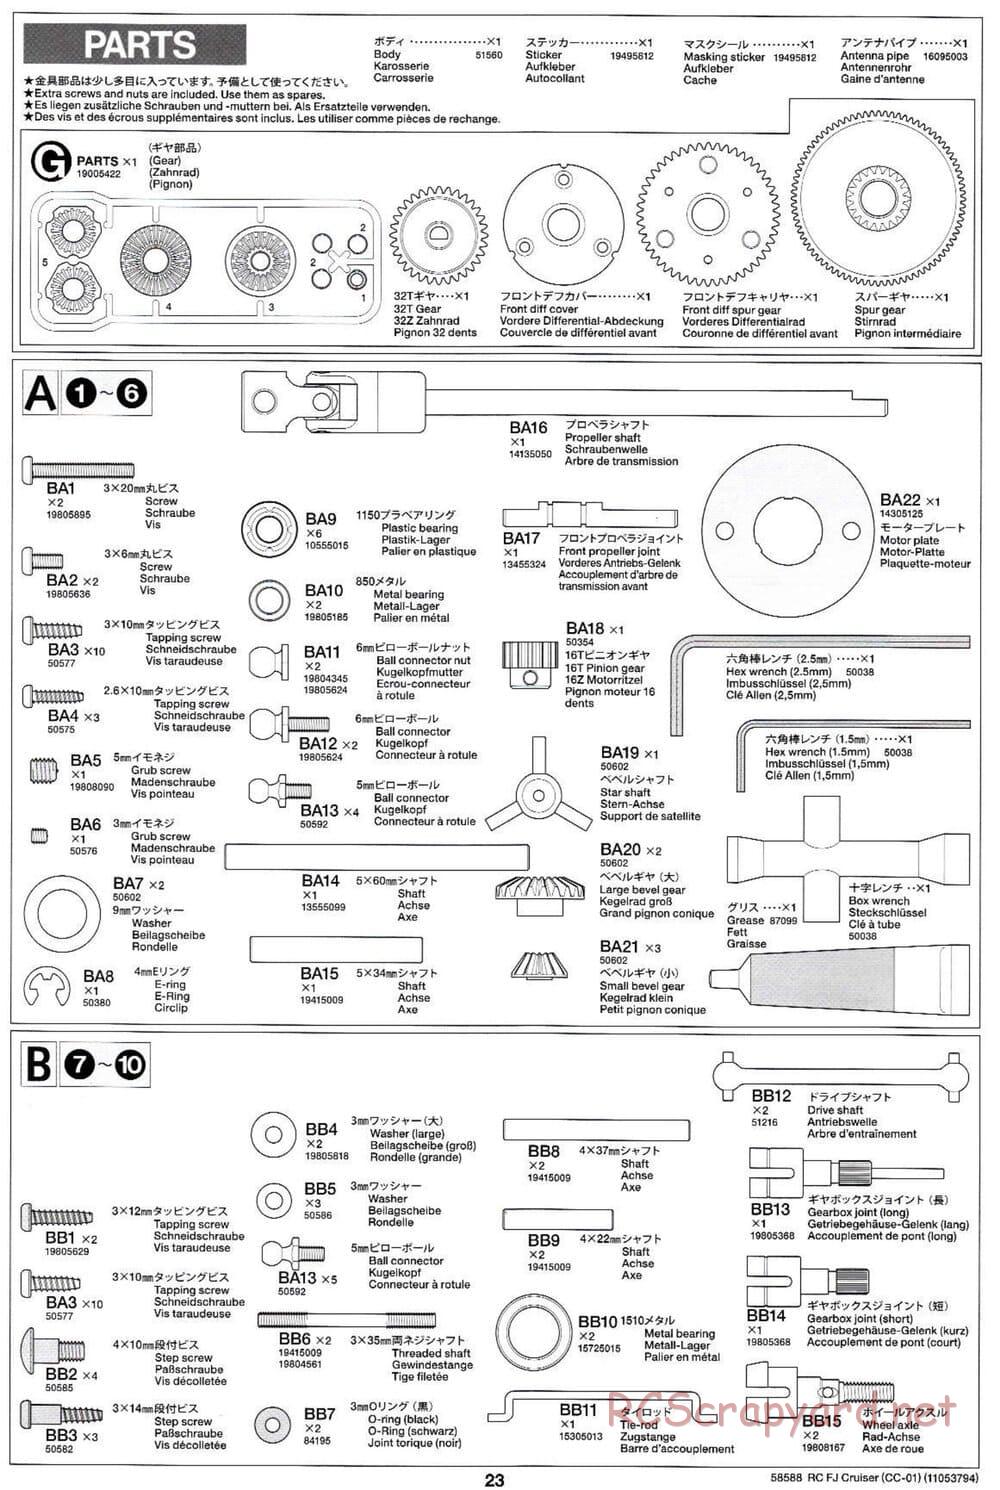 Tamiya - Toyota FJ Cruiser - CC-01 Chassis - Manual - Page 23